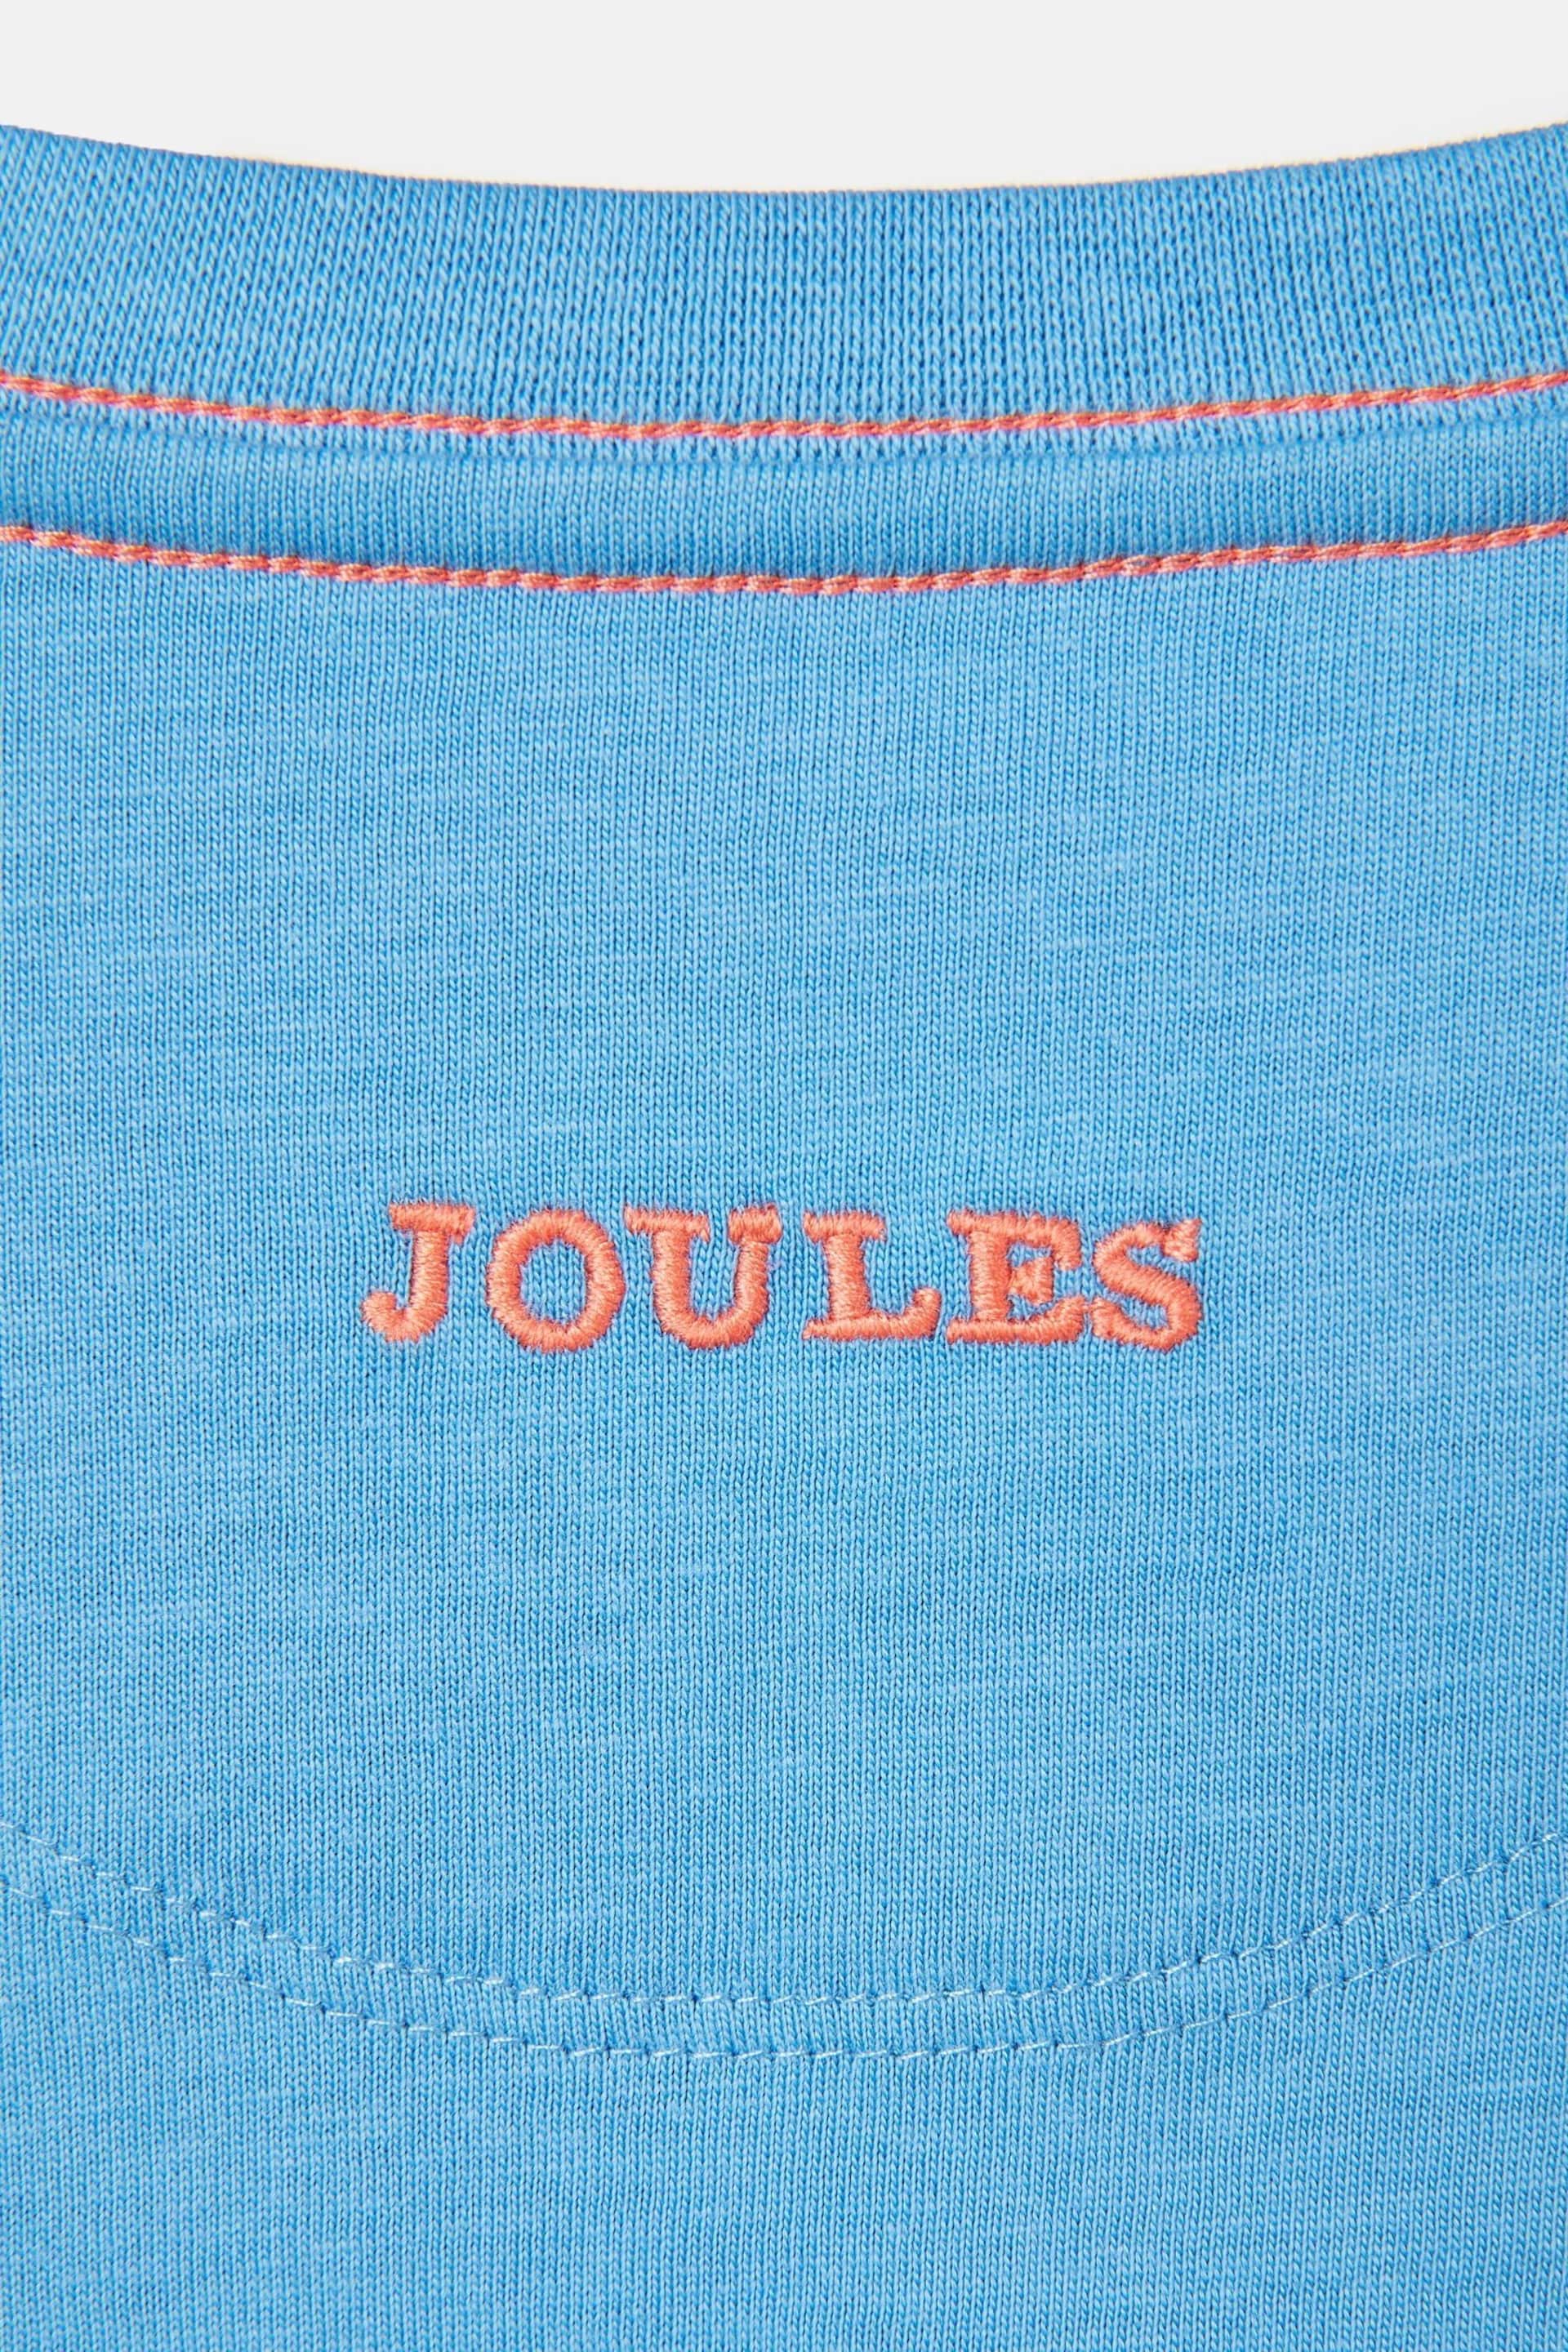 Joules Ben Blue Short Sleeve T-Shirt - Image 6 of 7